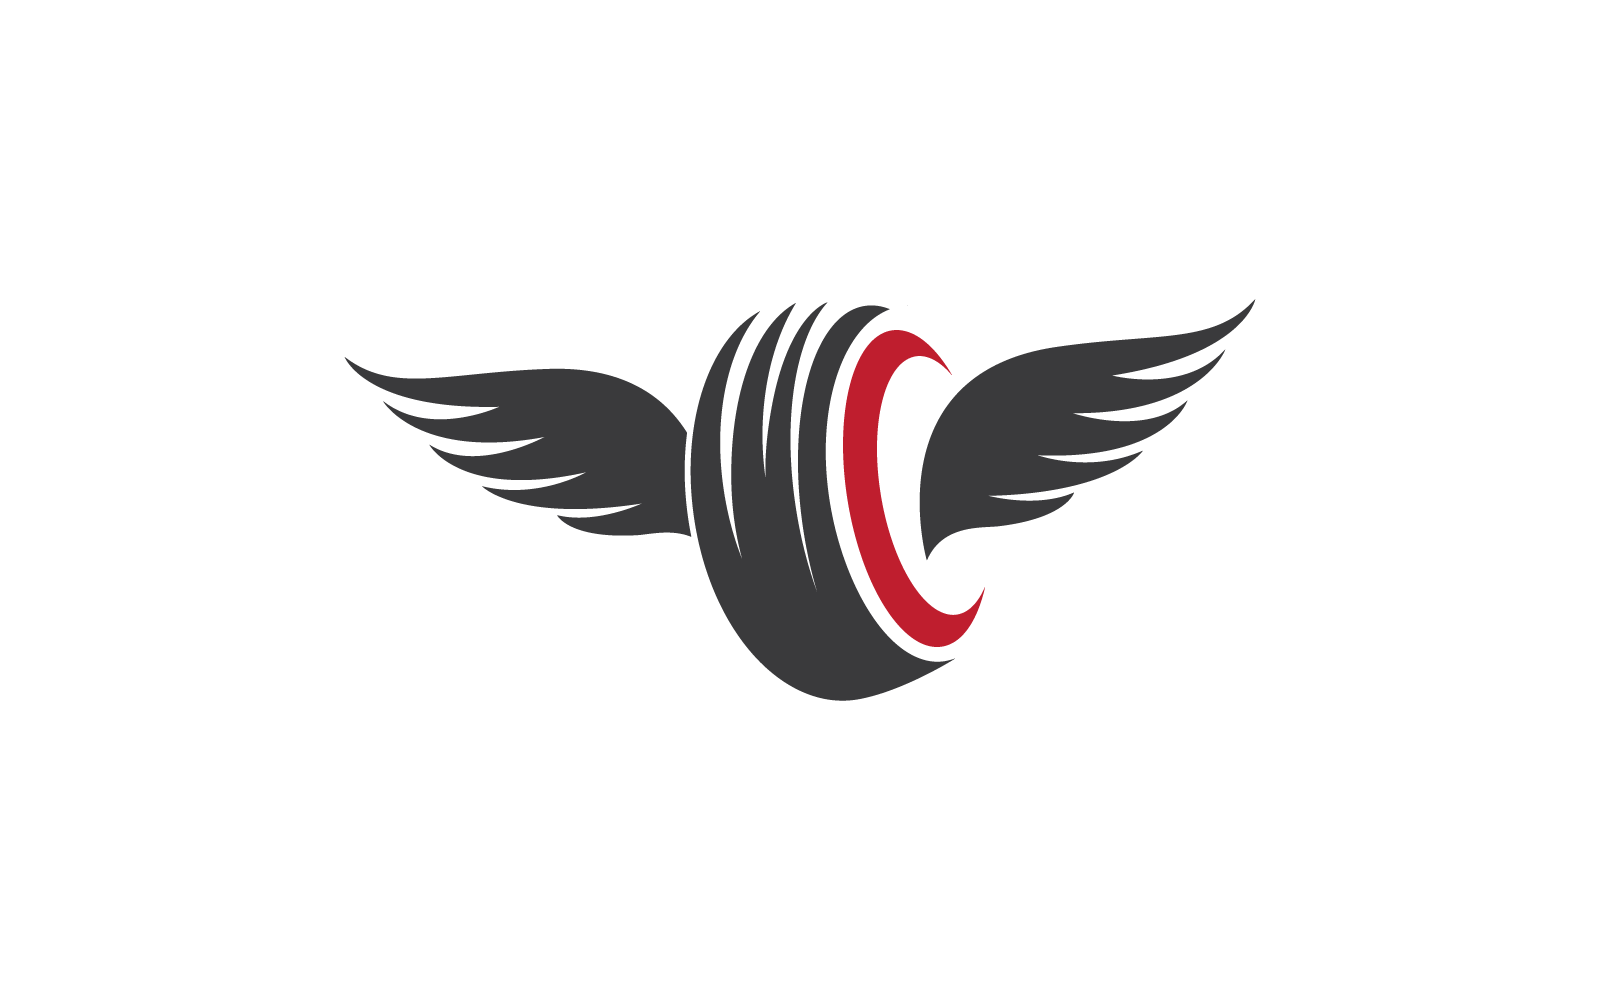 Шаблон векторного логотипа шин и крыльев